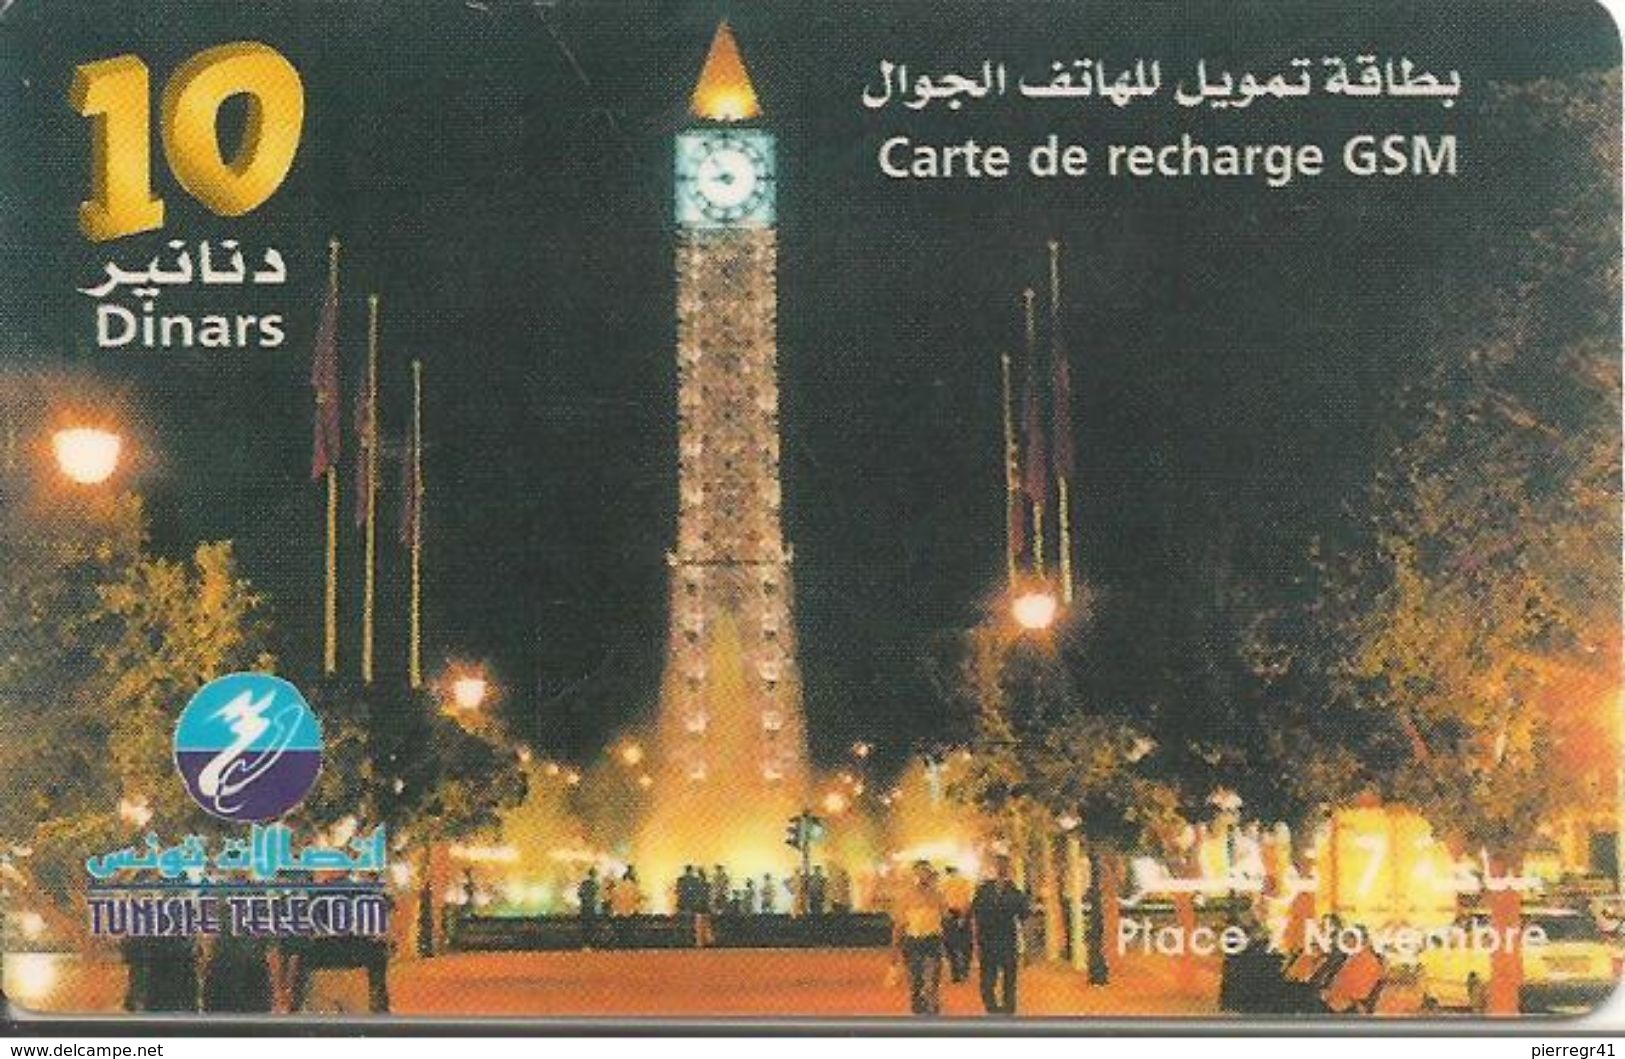 CARTE-PREPAYEE-TUNISIE-GSM-10Dinars-TUNISIE TELECOM-TUNIS PLACE Du 7 Novembre- Plastic Fin-TBE - Tunisie